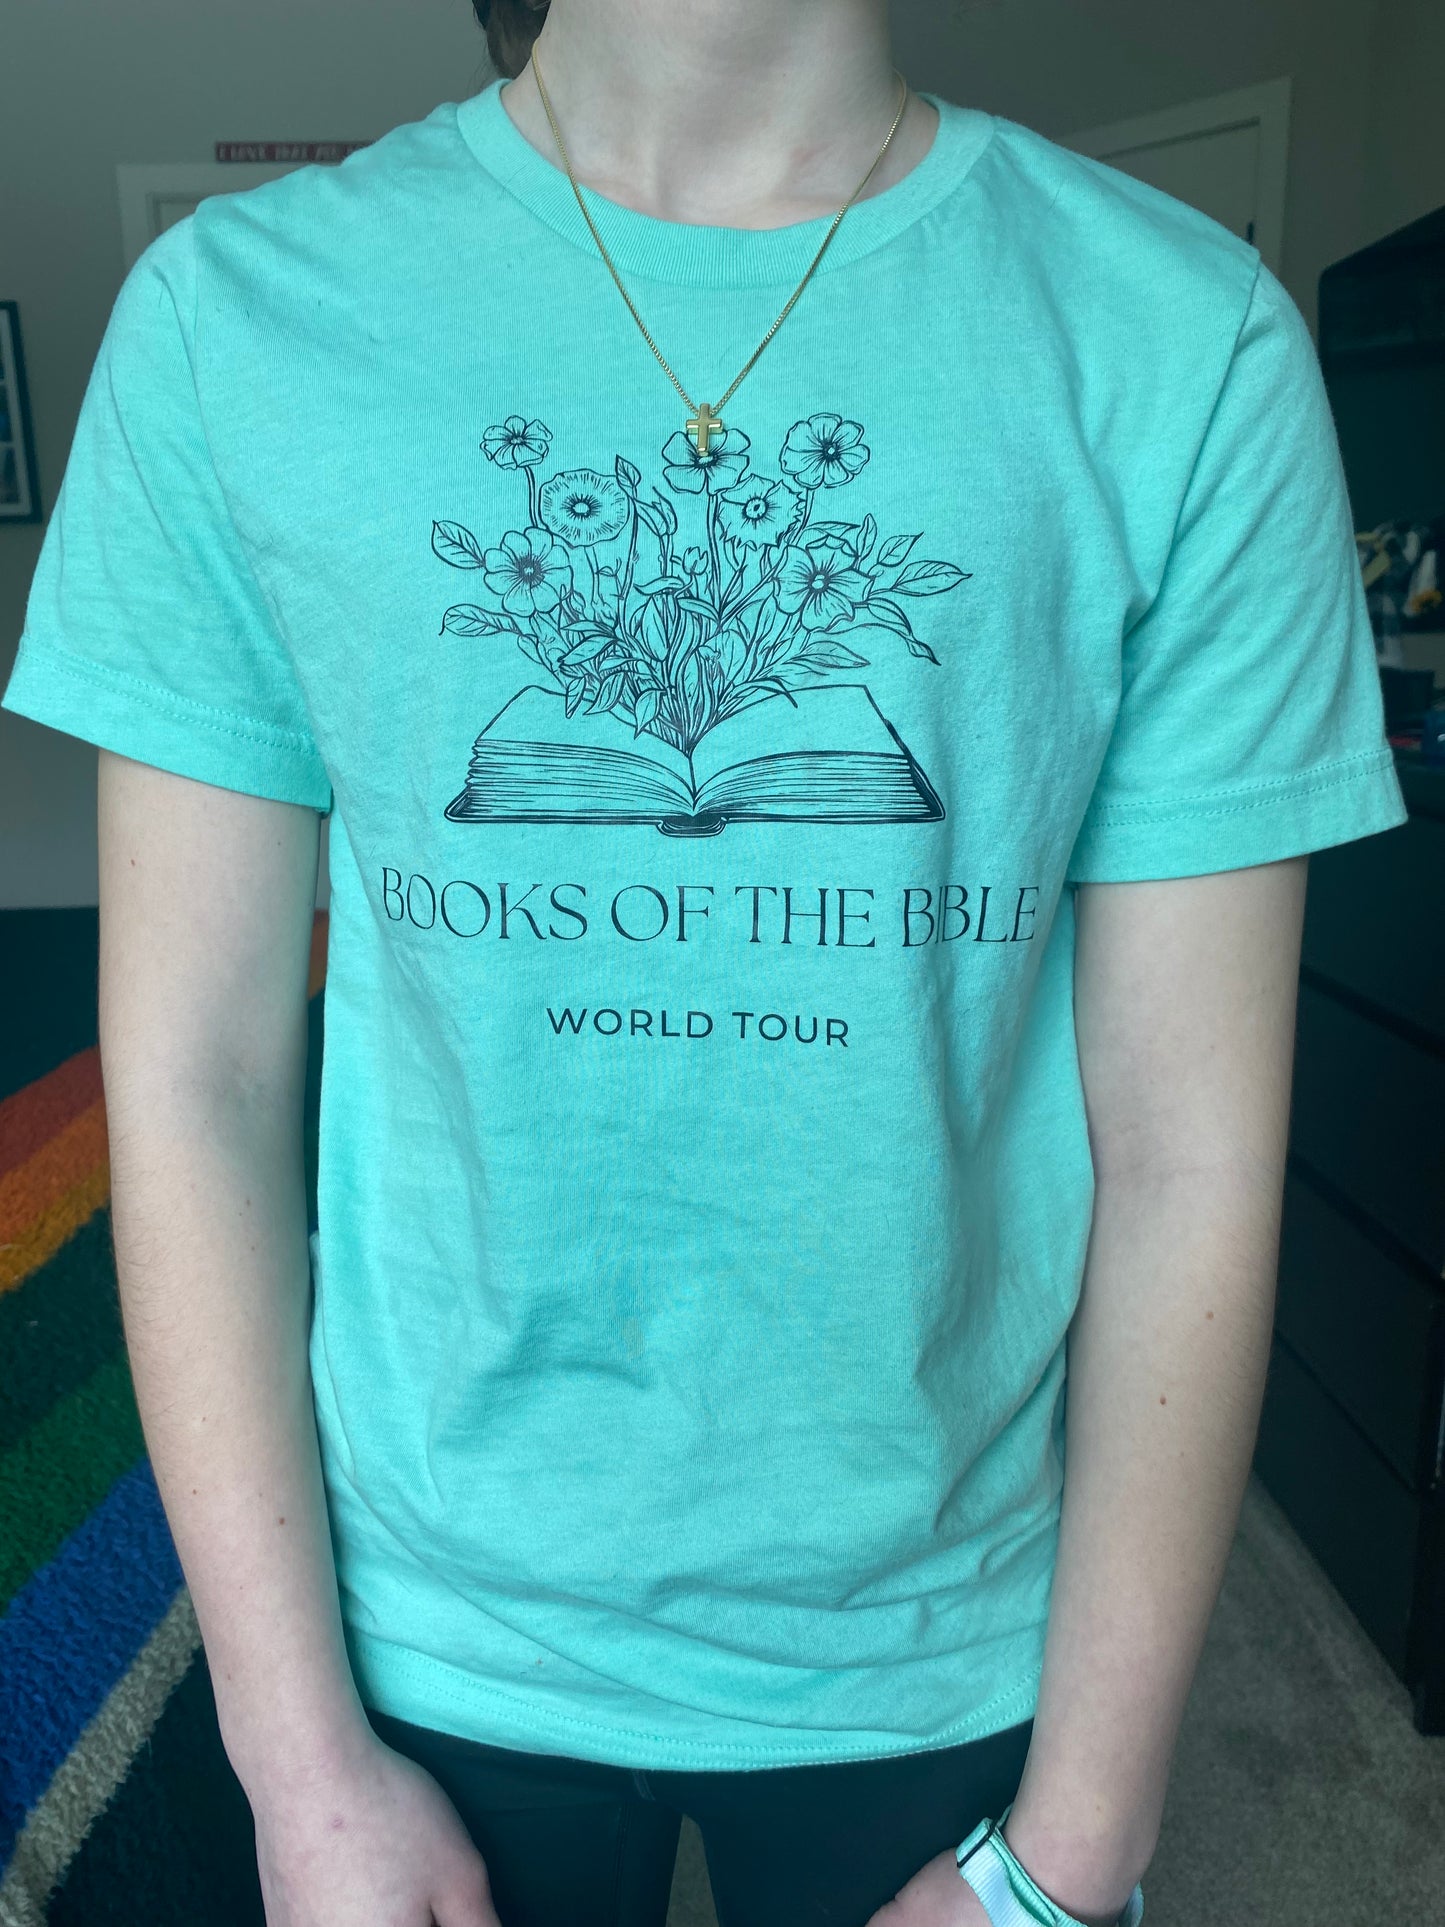 Books of the Bible World Tour - T-Shirt